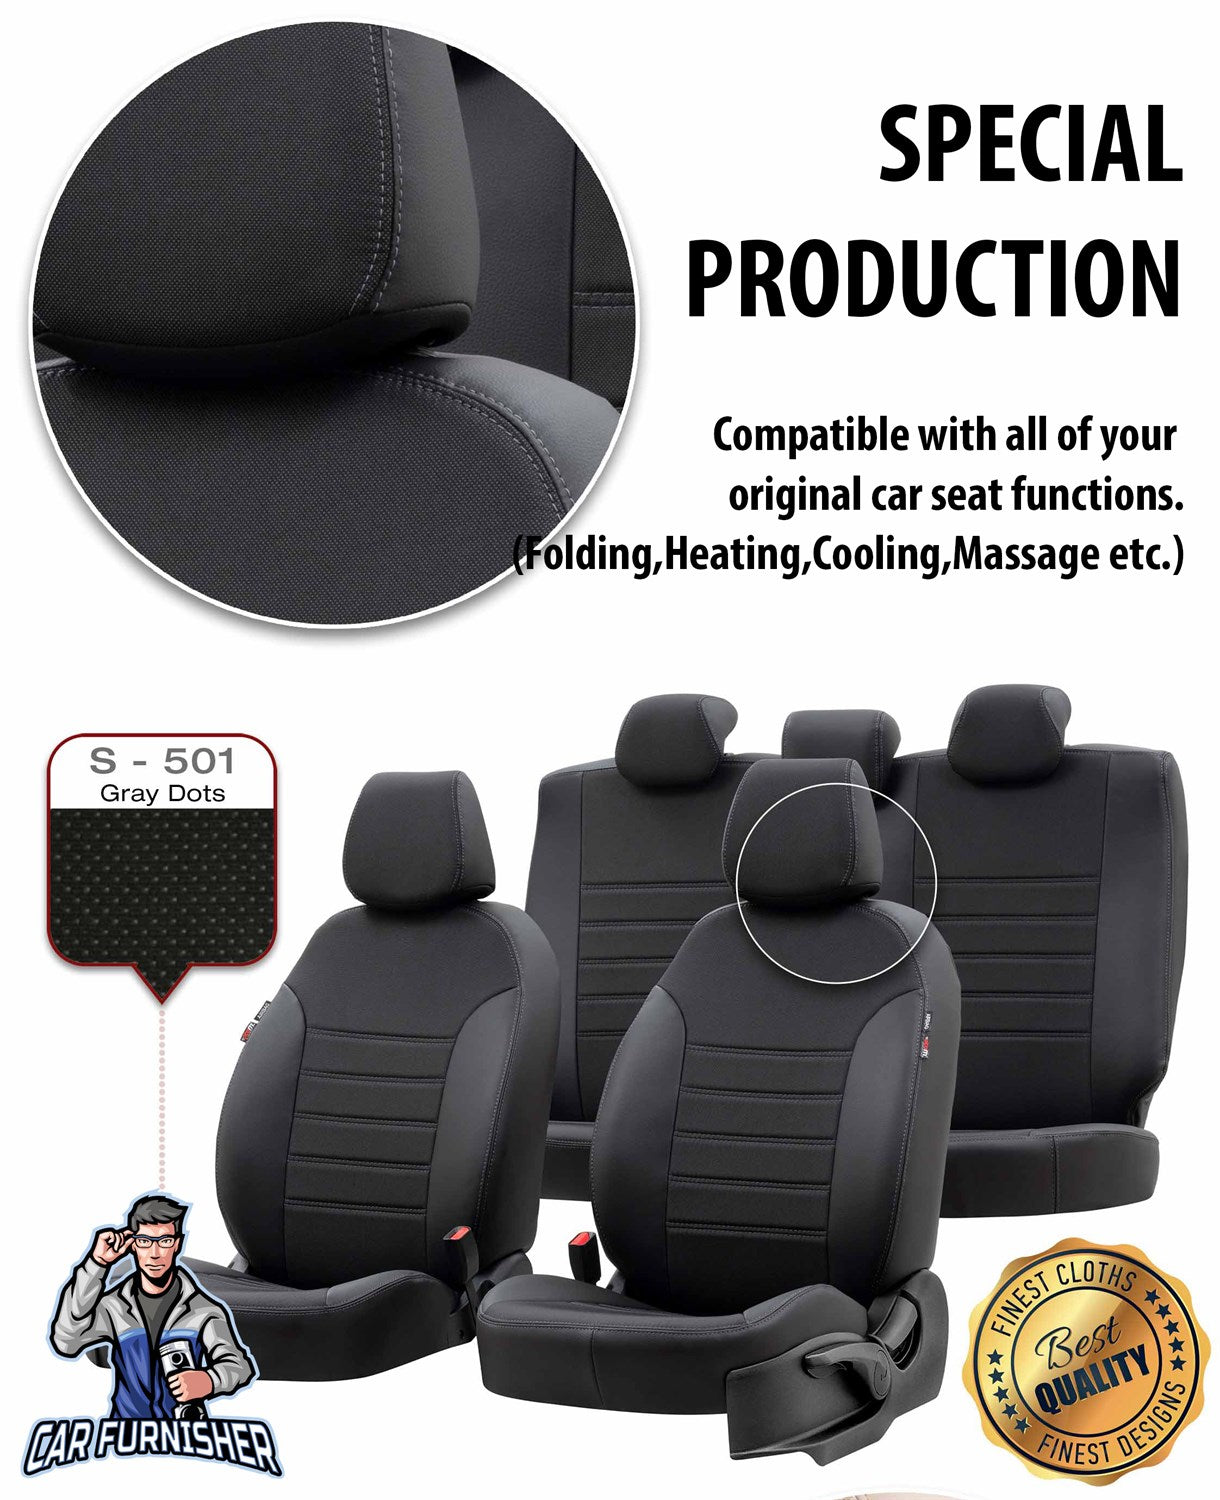 Ssangyong Musso Seat Cover Paris Leather & Jacquard Design Black Leather & Jacquard Fabric